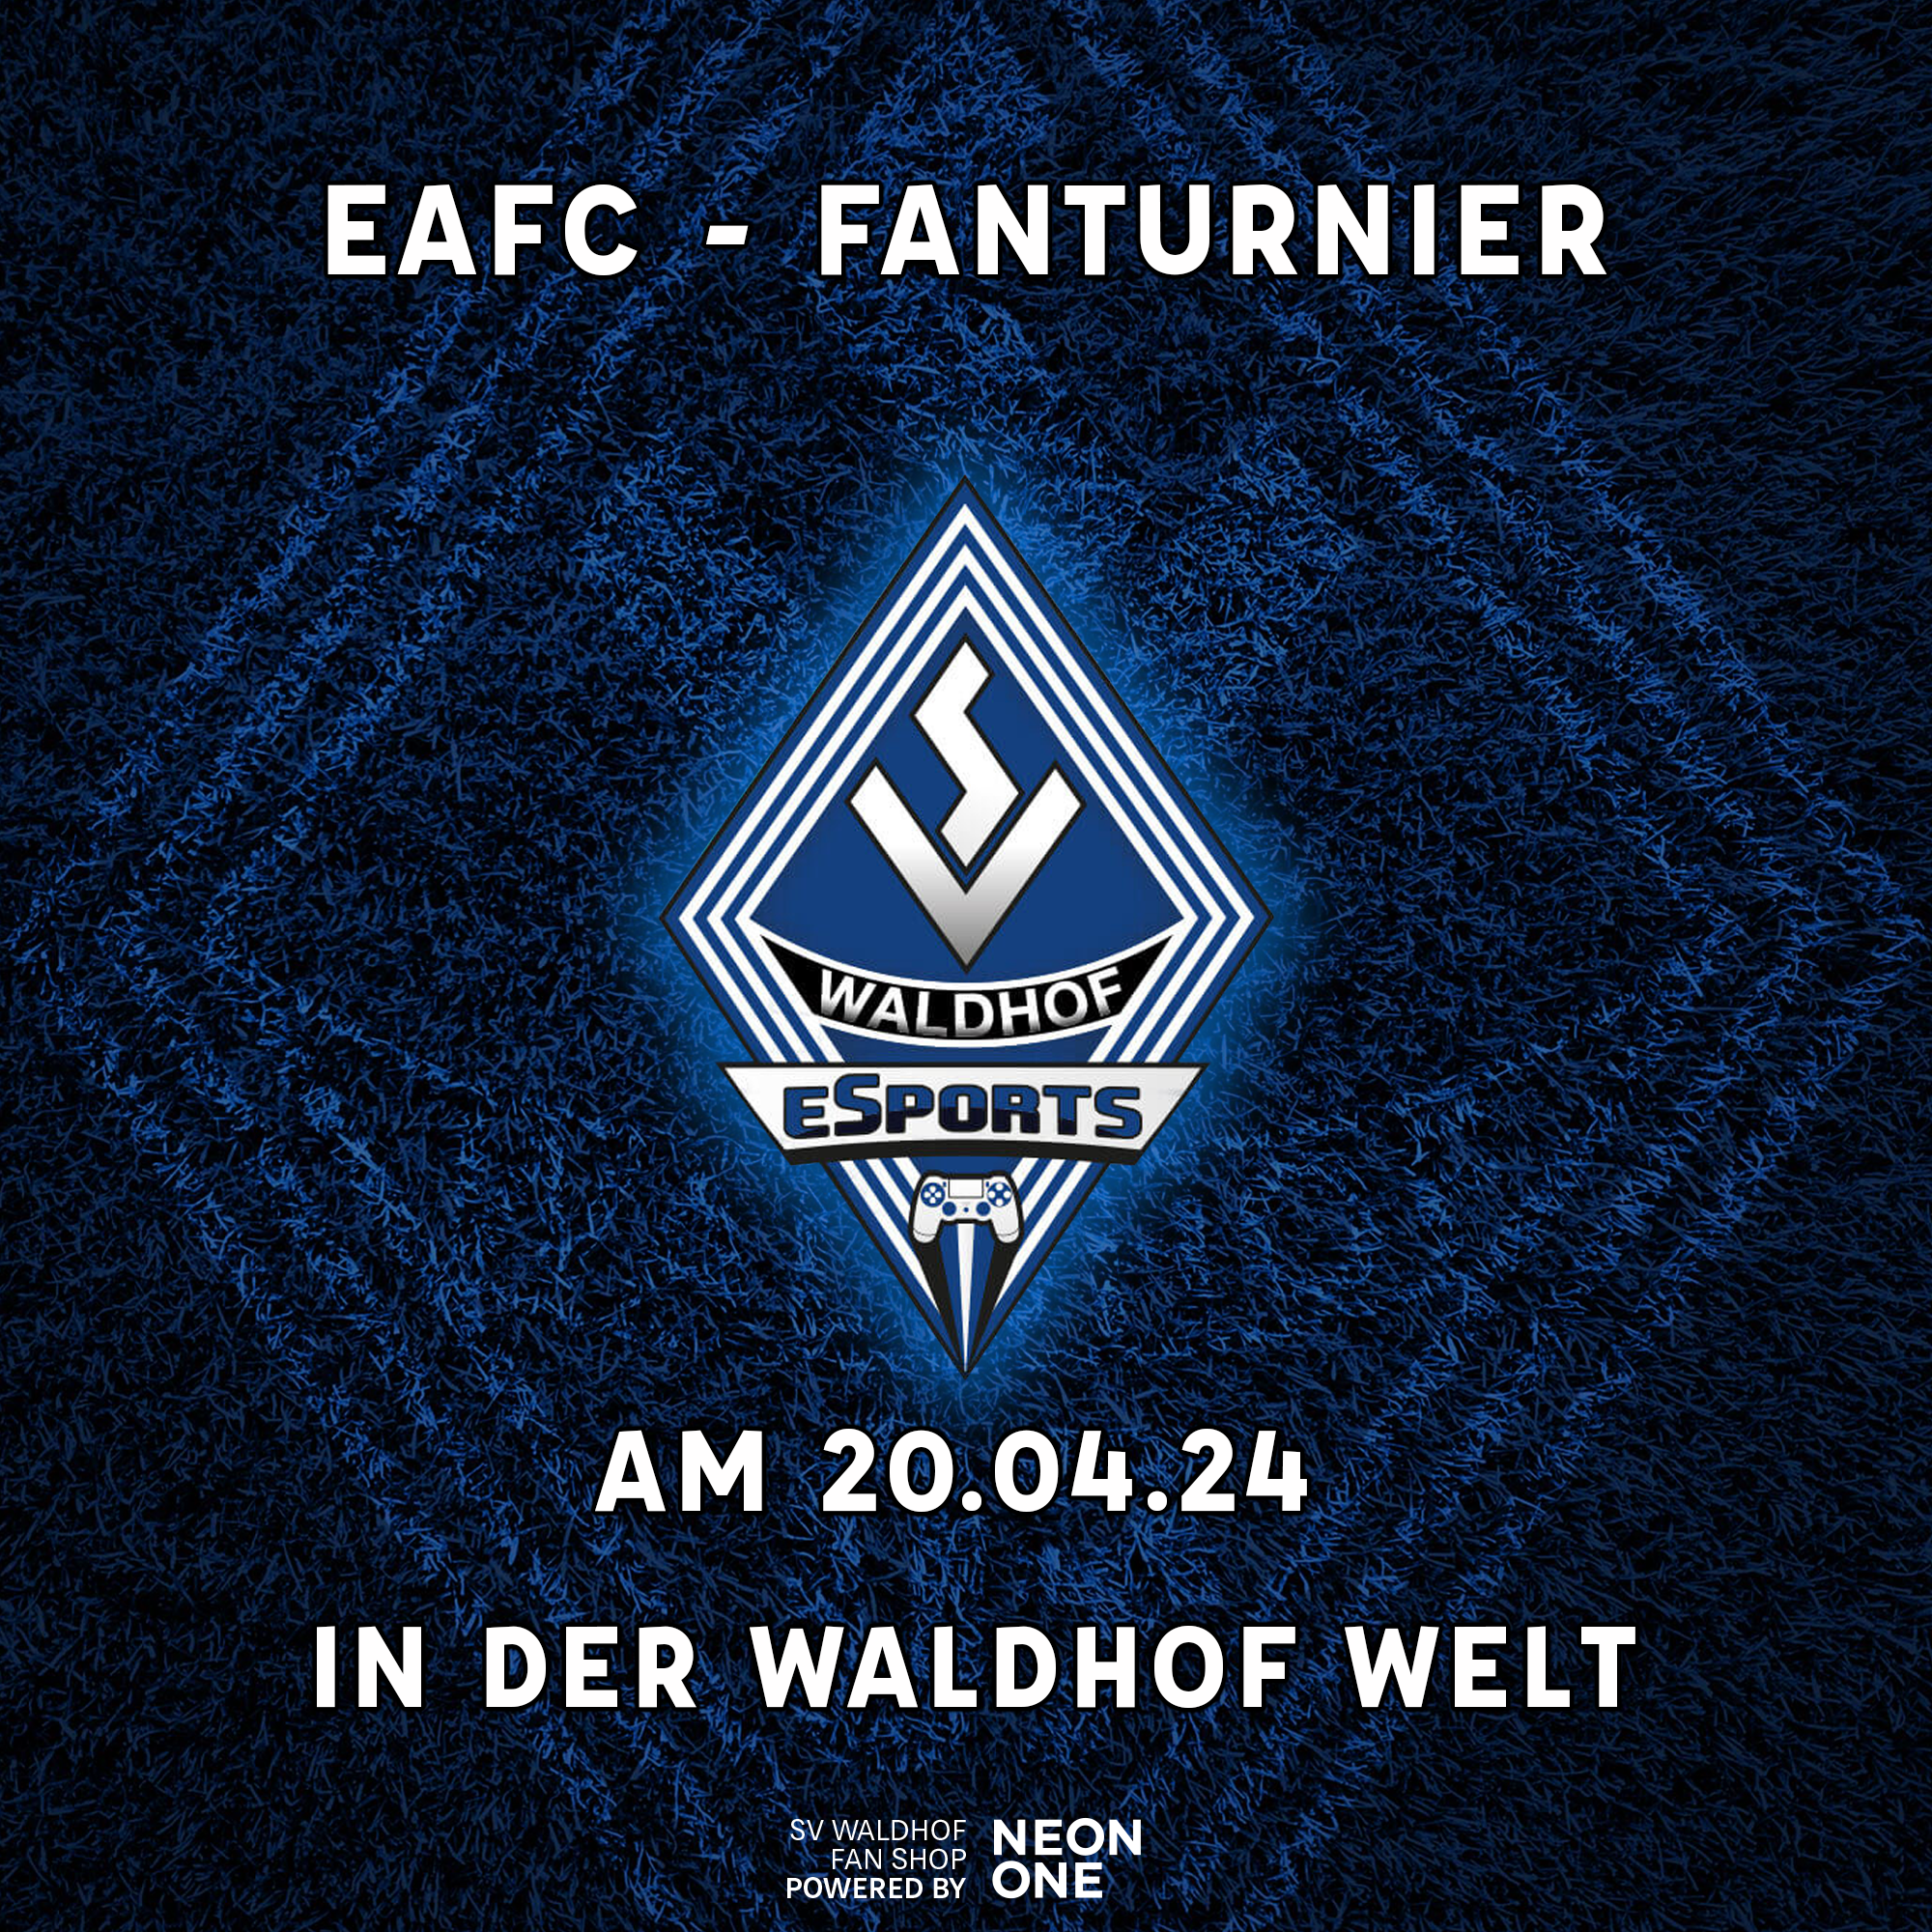 EAFC Fanturnier - Anmeldung